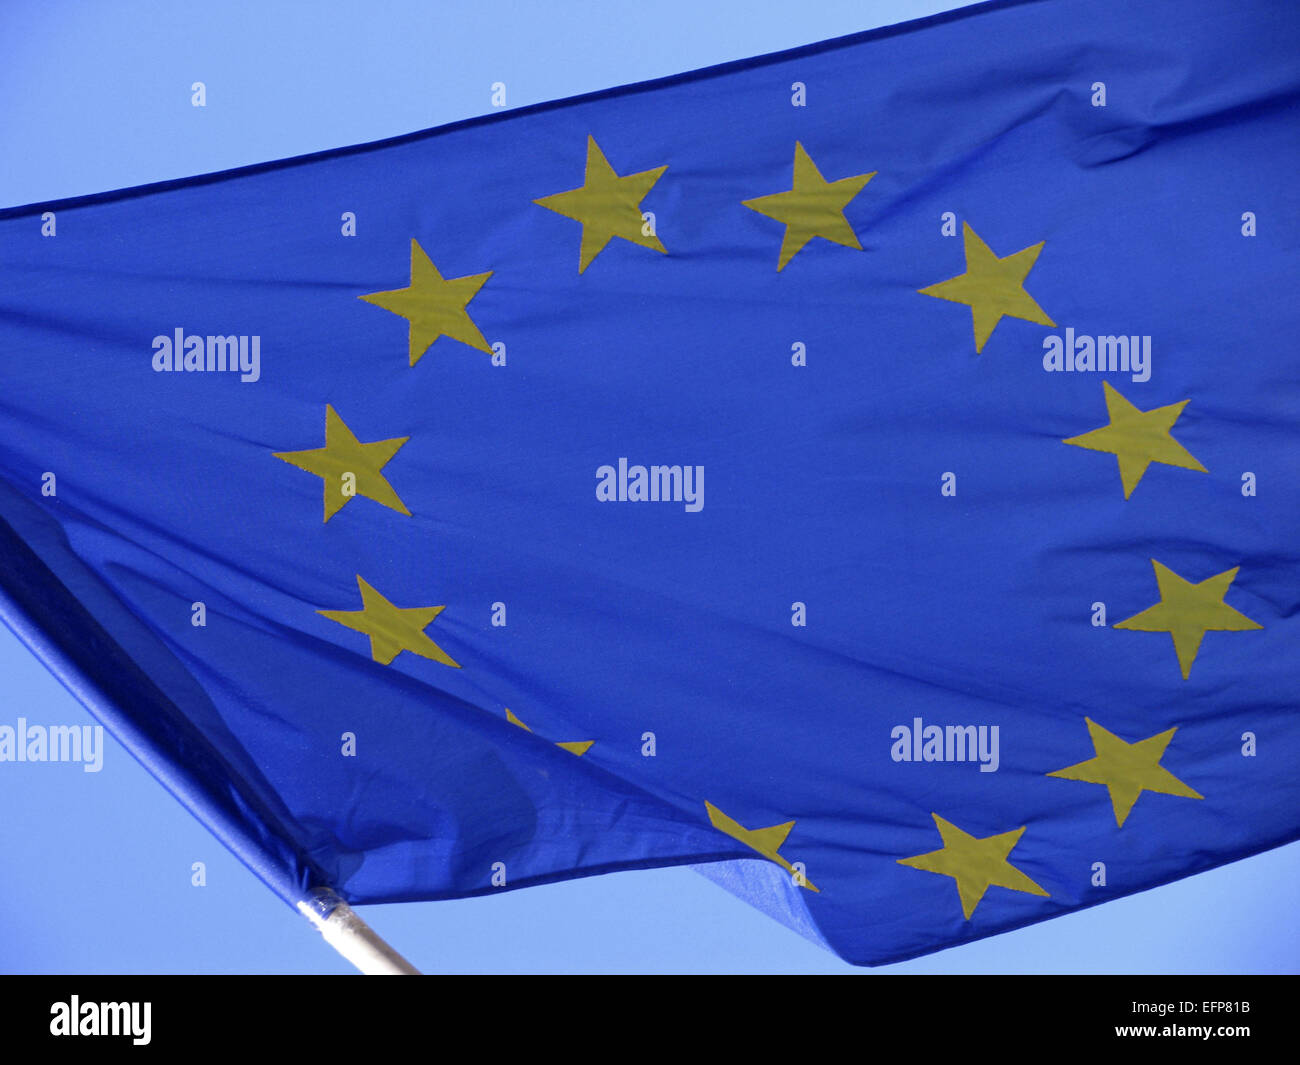 Europa Flagge Europaflagge Sachaufnahme Fahne Europaeisch Europafahne Europa-Europa-flagge fahne Wehen Wind ue Europaeische Unio Foto de stock